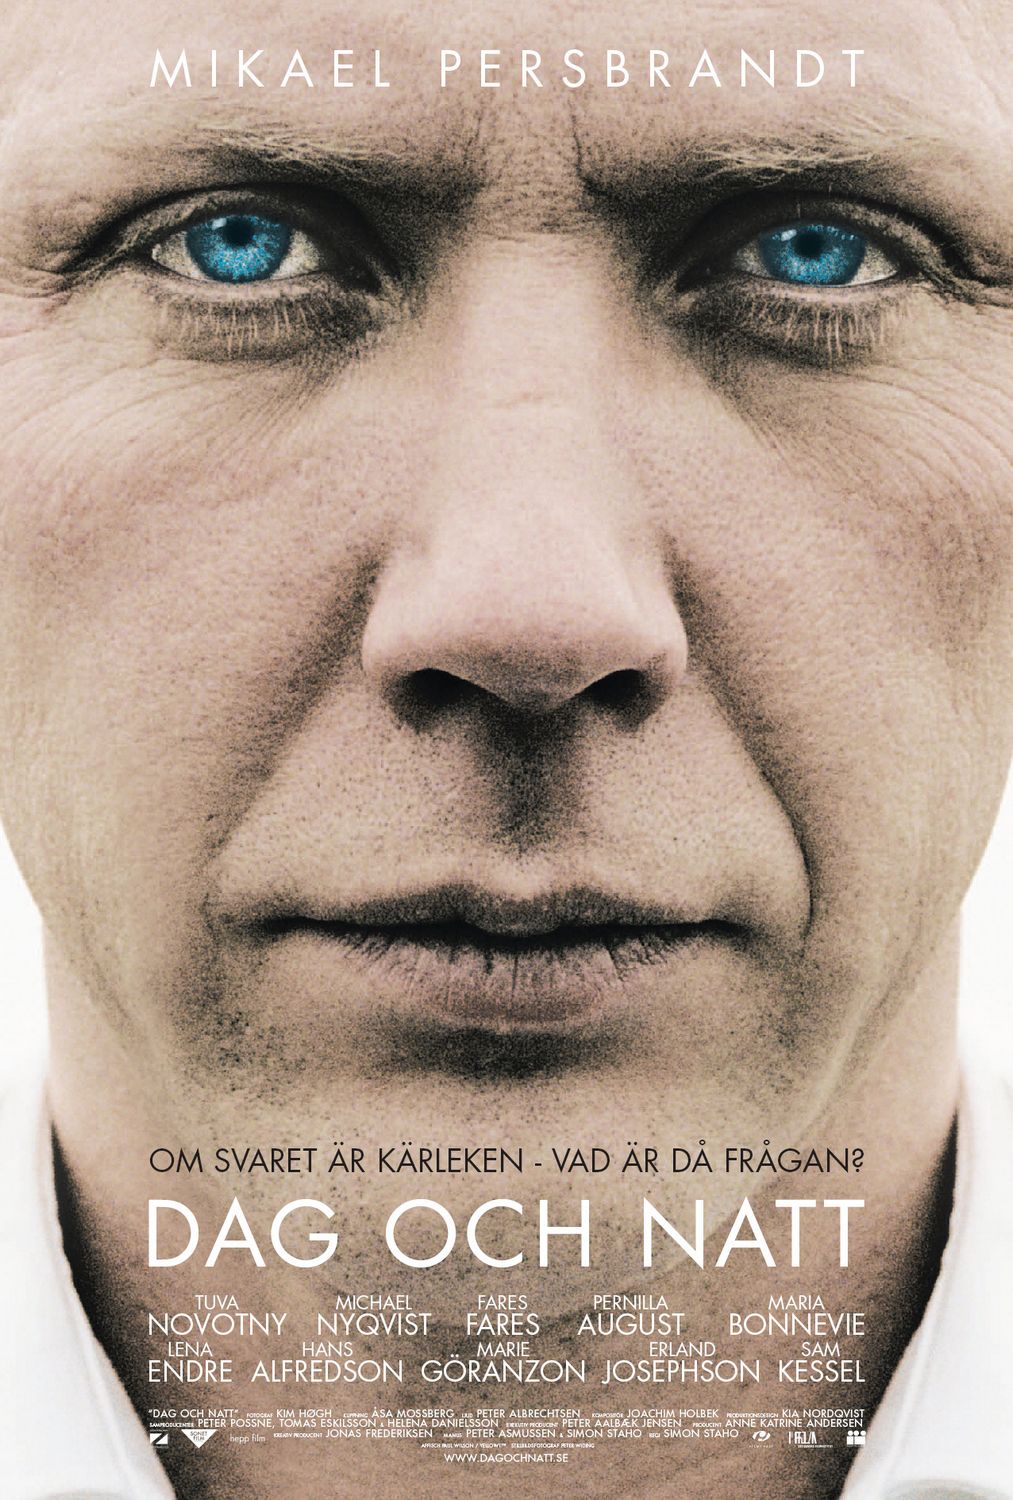 Extra Large Movie Poster Image for Dag och natt (Day and Night) 